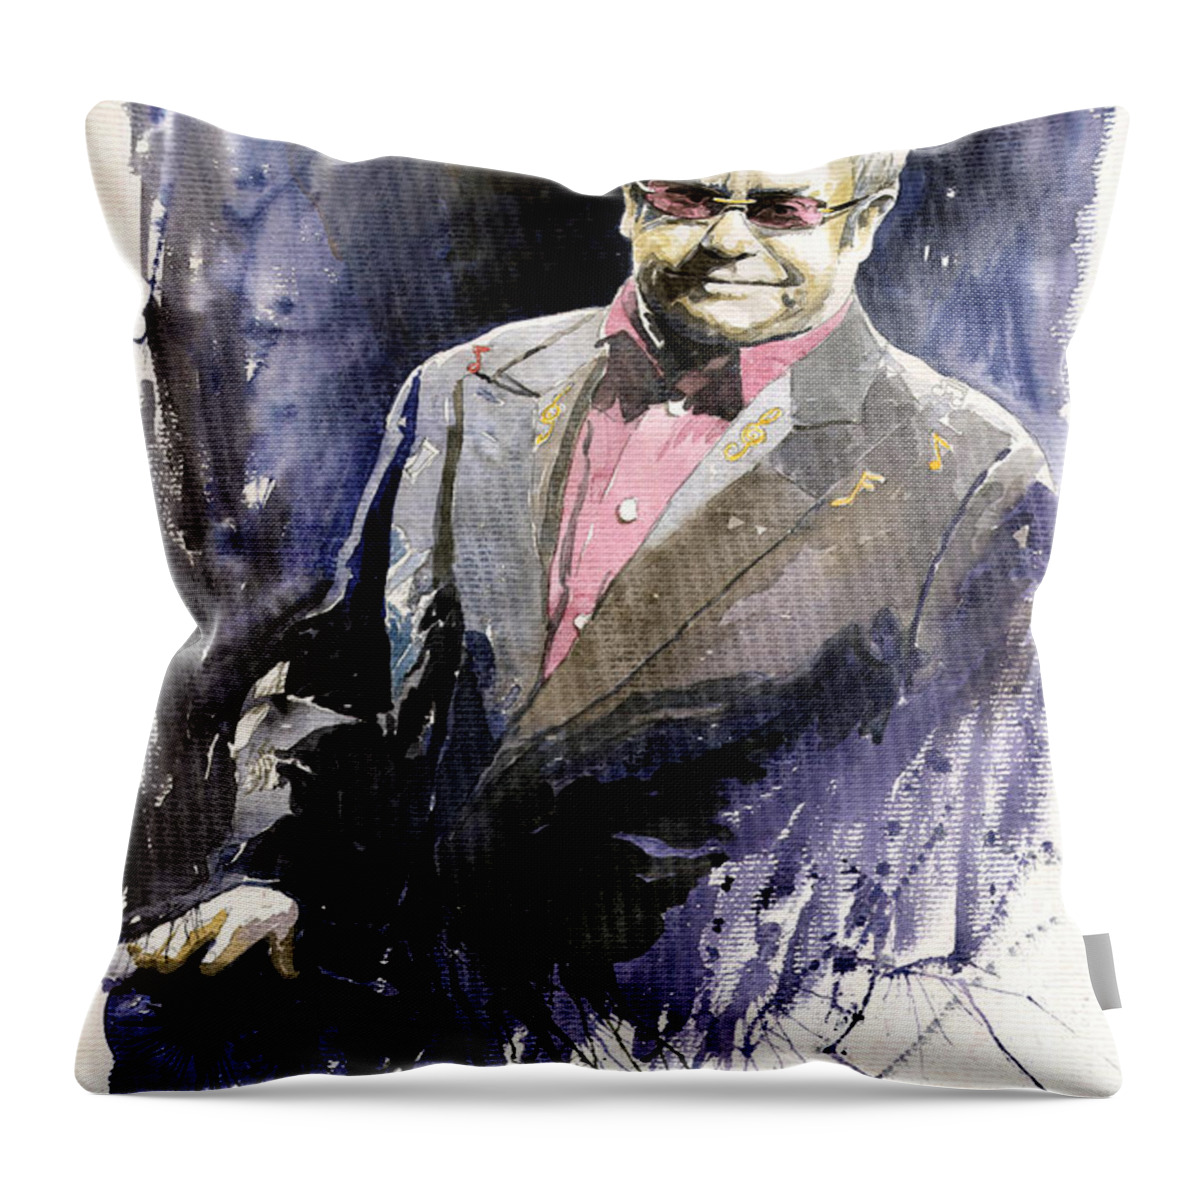 Watercolour Throw Pillow featuring the painting Jazz Sir Elton John by Yuriy Shevchuk